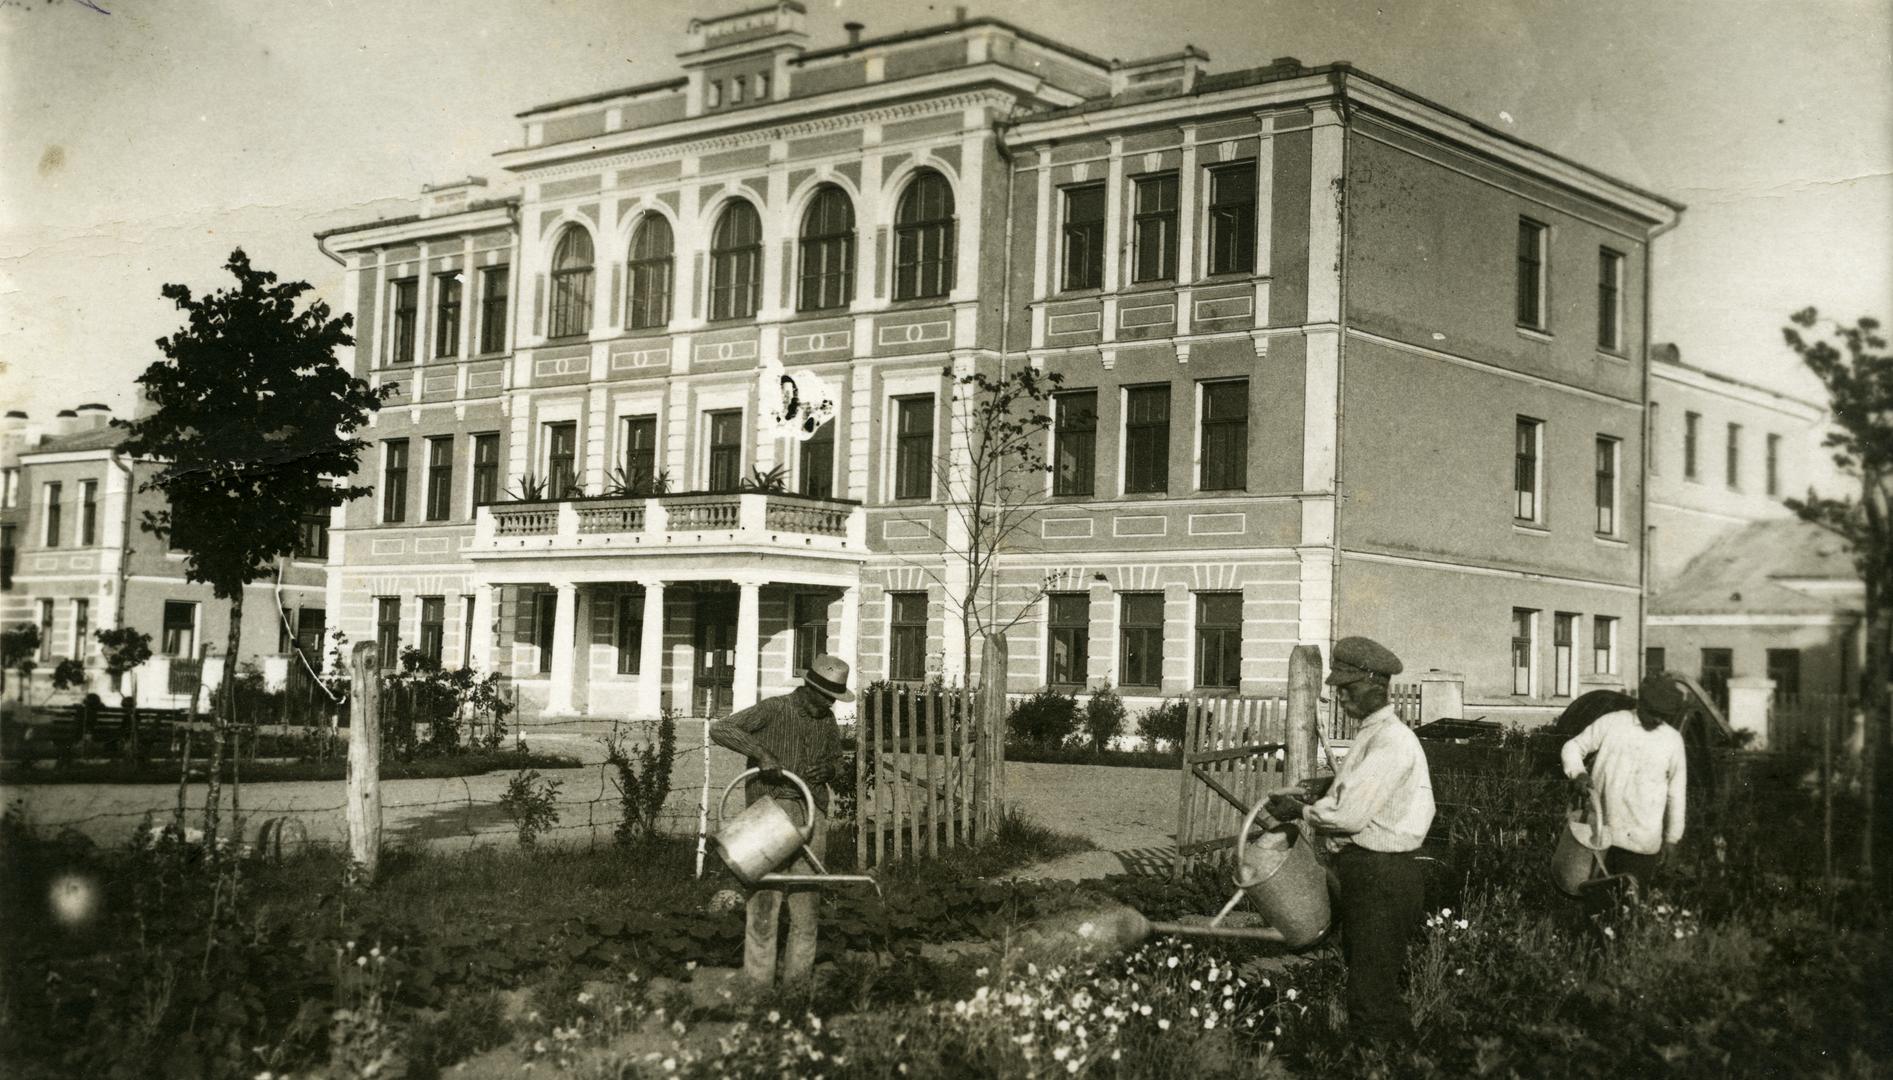 Views of Rakvere Teachers Seminar buildings and interior rooms until 1989